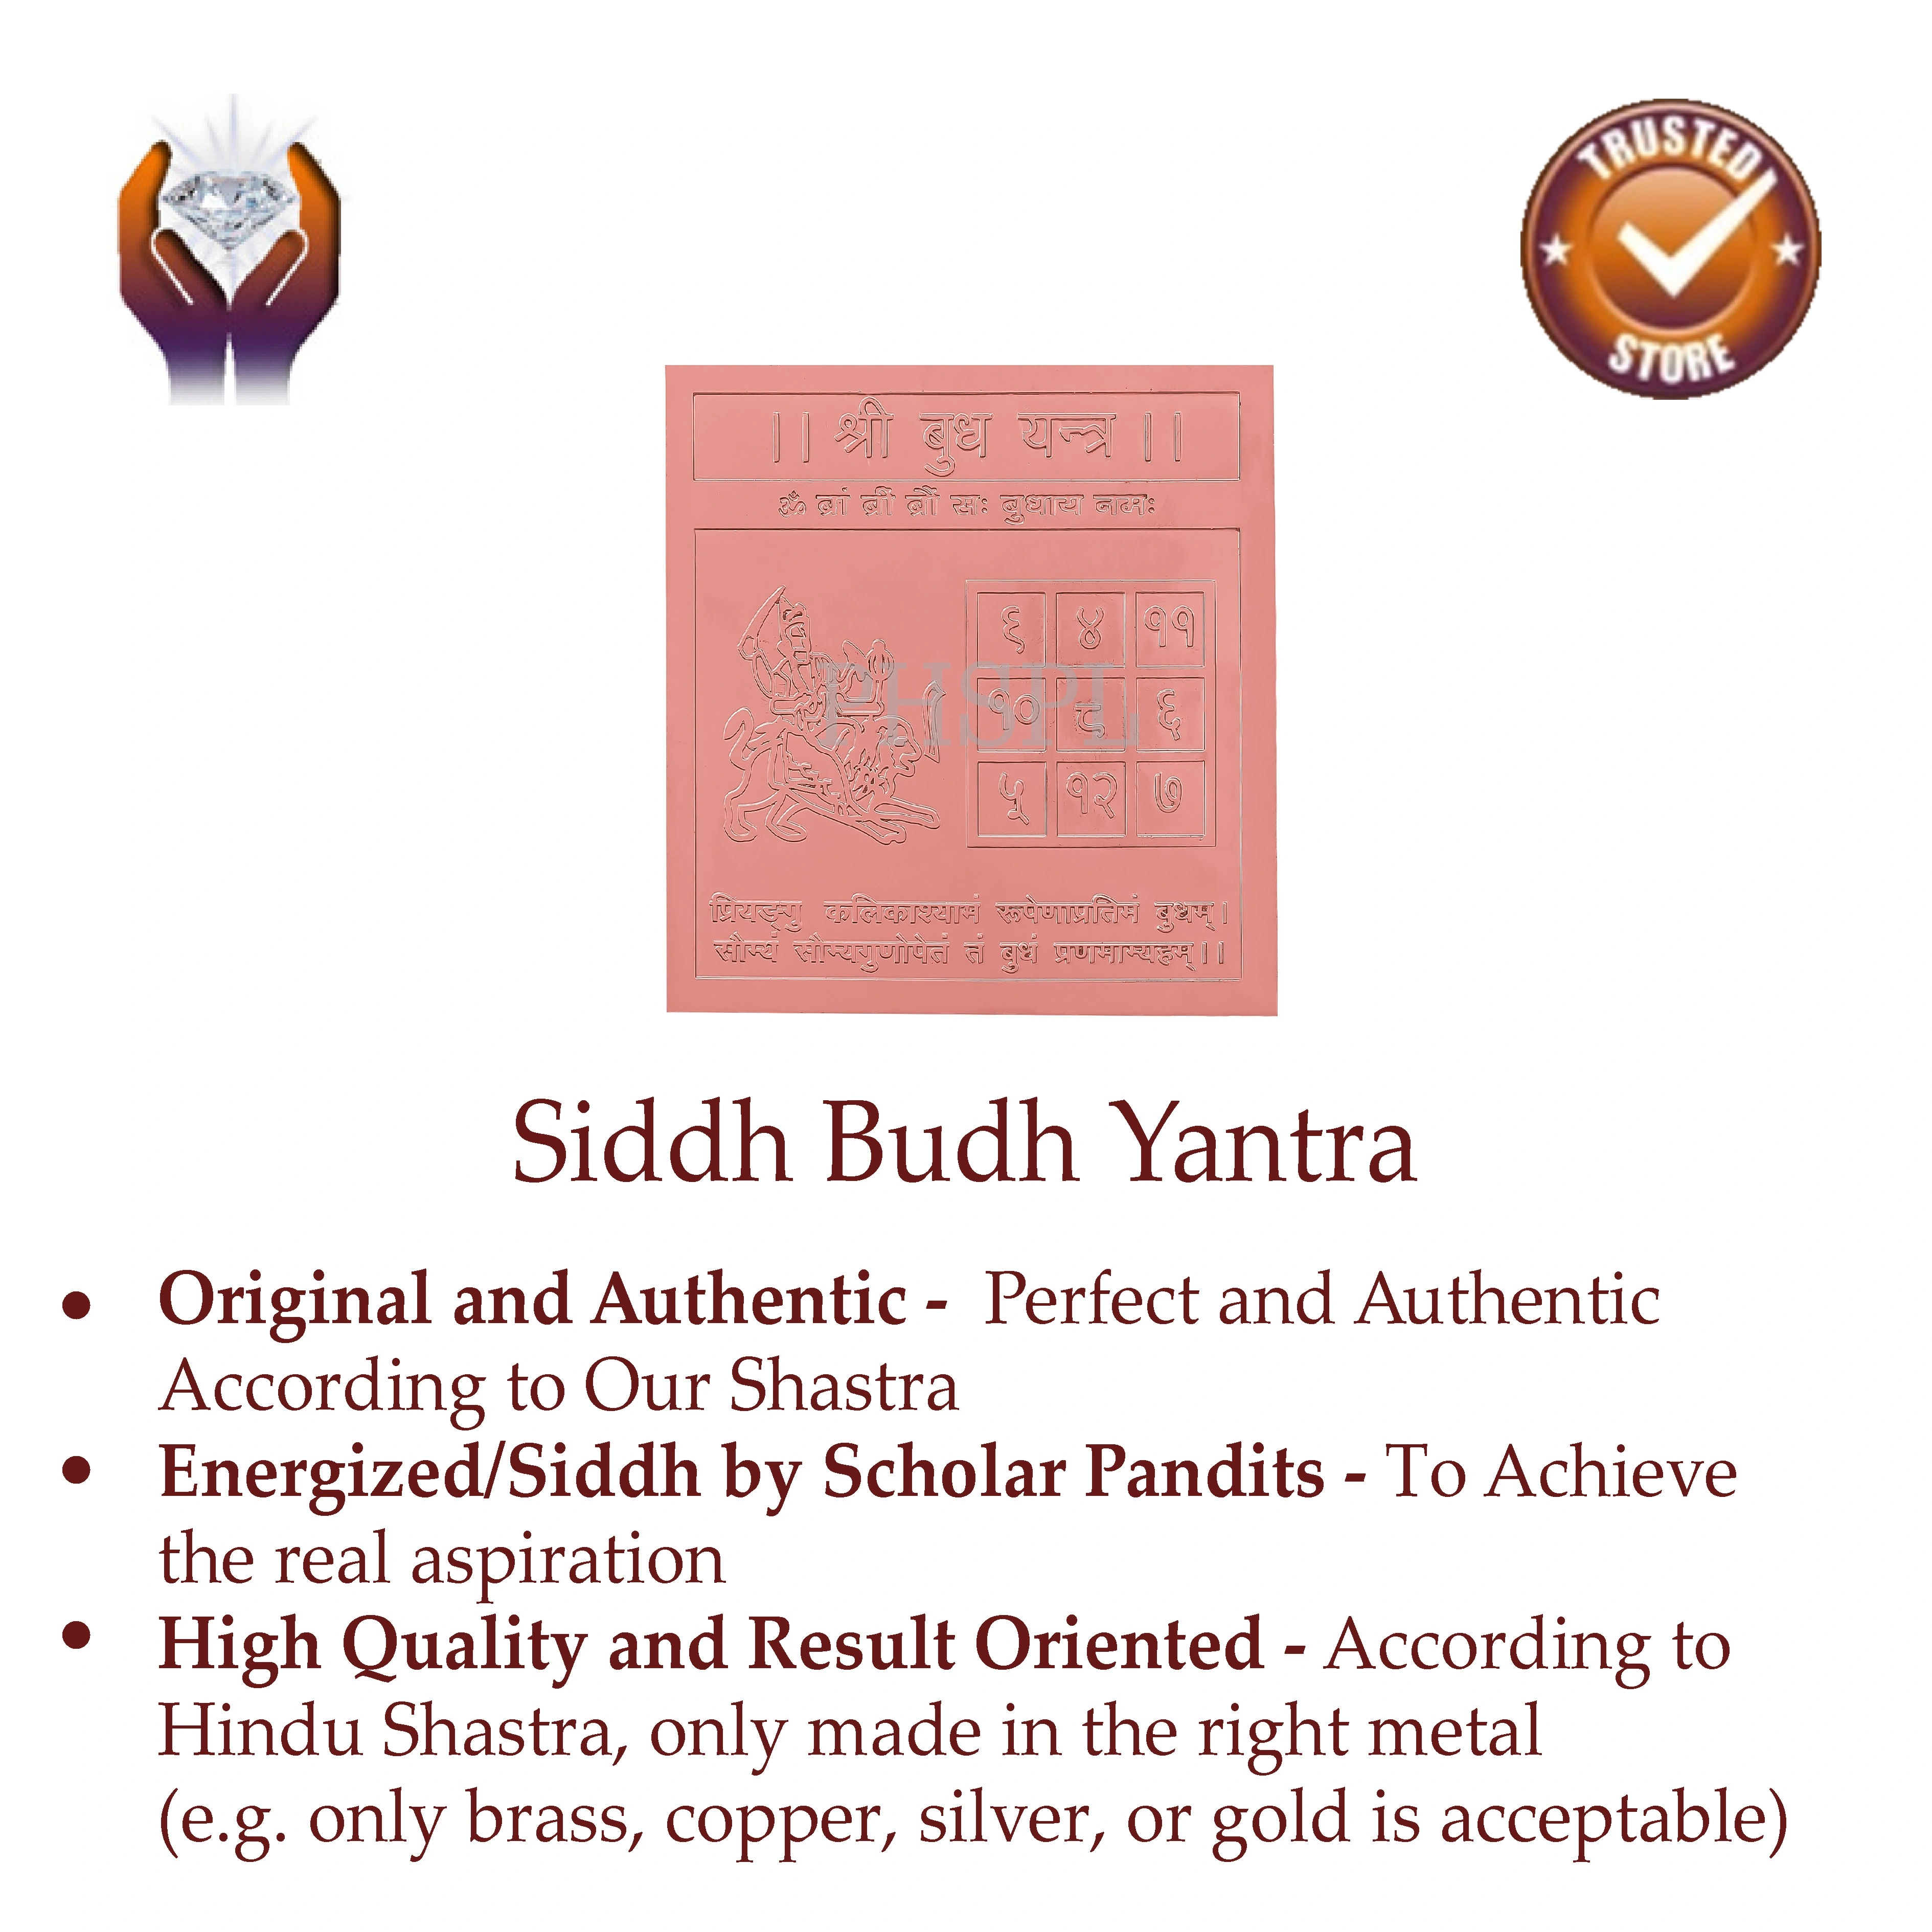 Budh Yantra Benefits